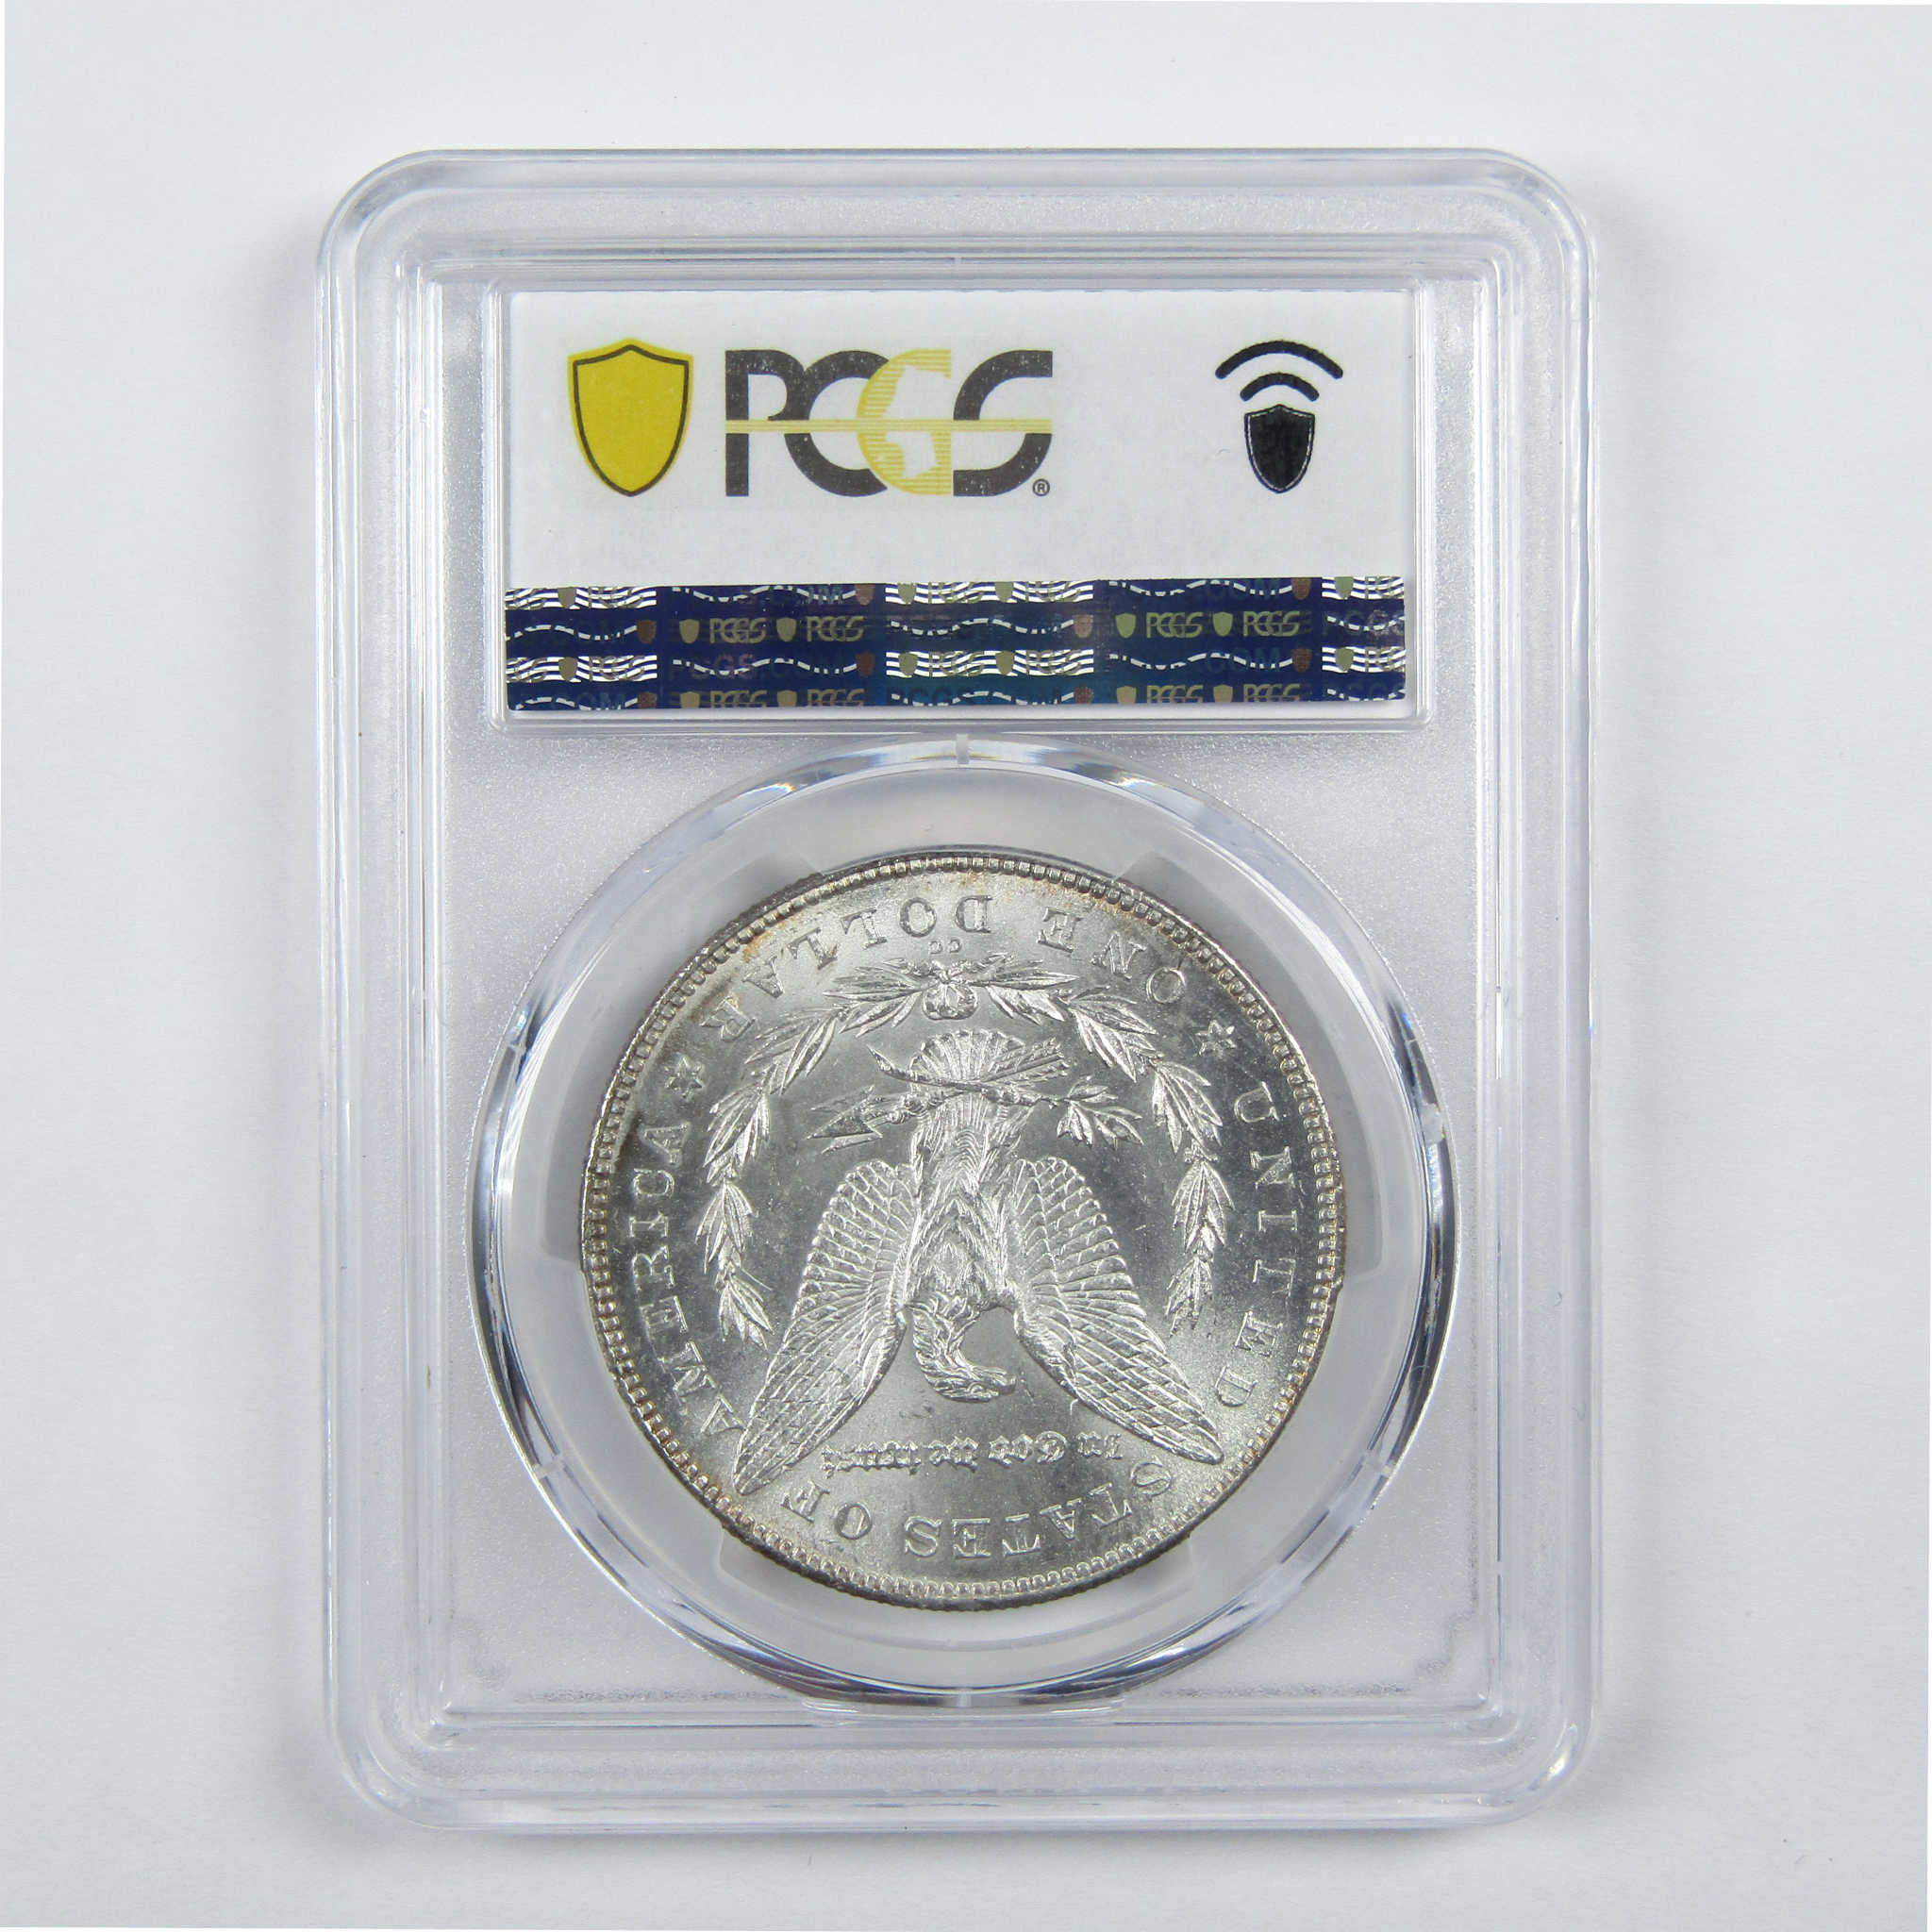 1880 CC 8/7 Rev 78 Morgan Dollar MS 63 PCGS Silver $1 Coin SKU:I11736 - Morgan coin - Morgan silver dollar - Morgan silver dollar for sale - Profile Coins &amp; Collectibles